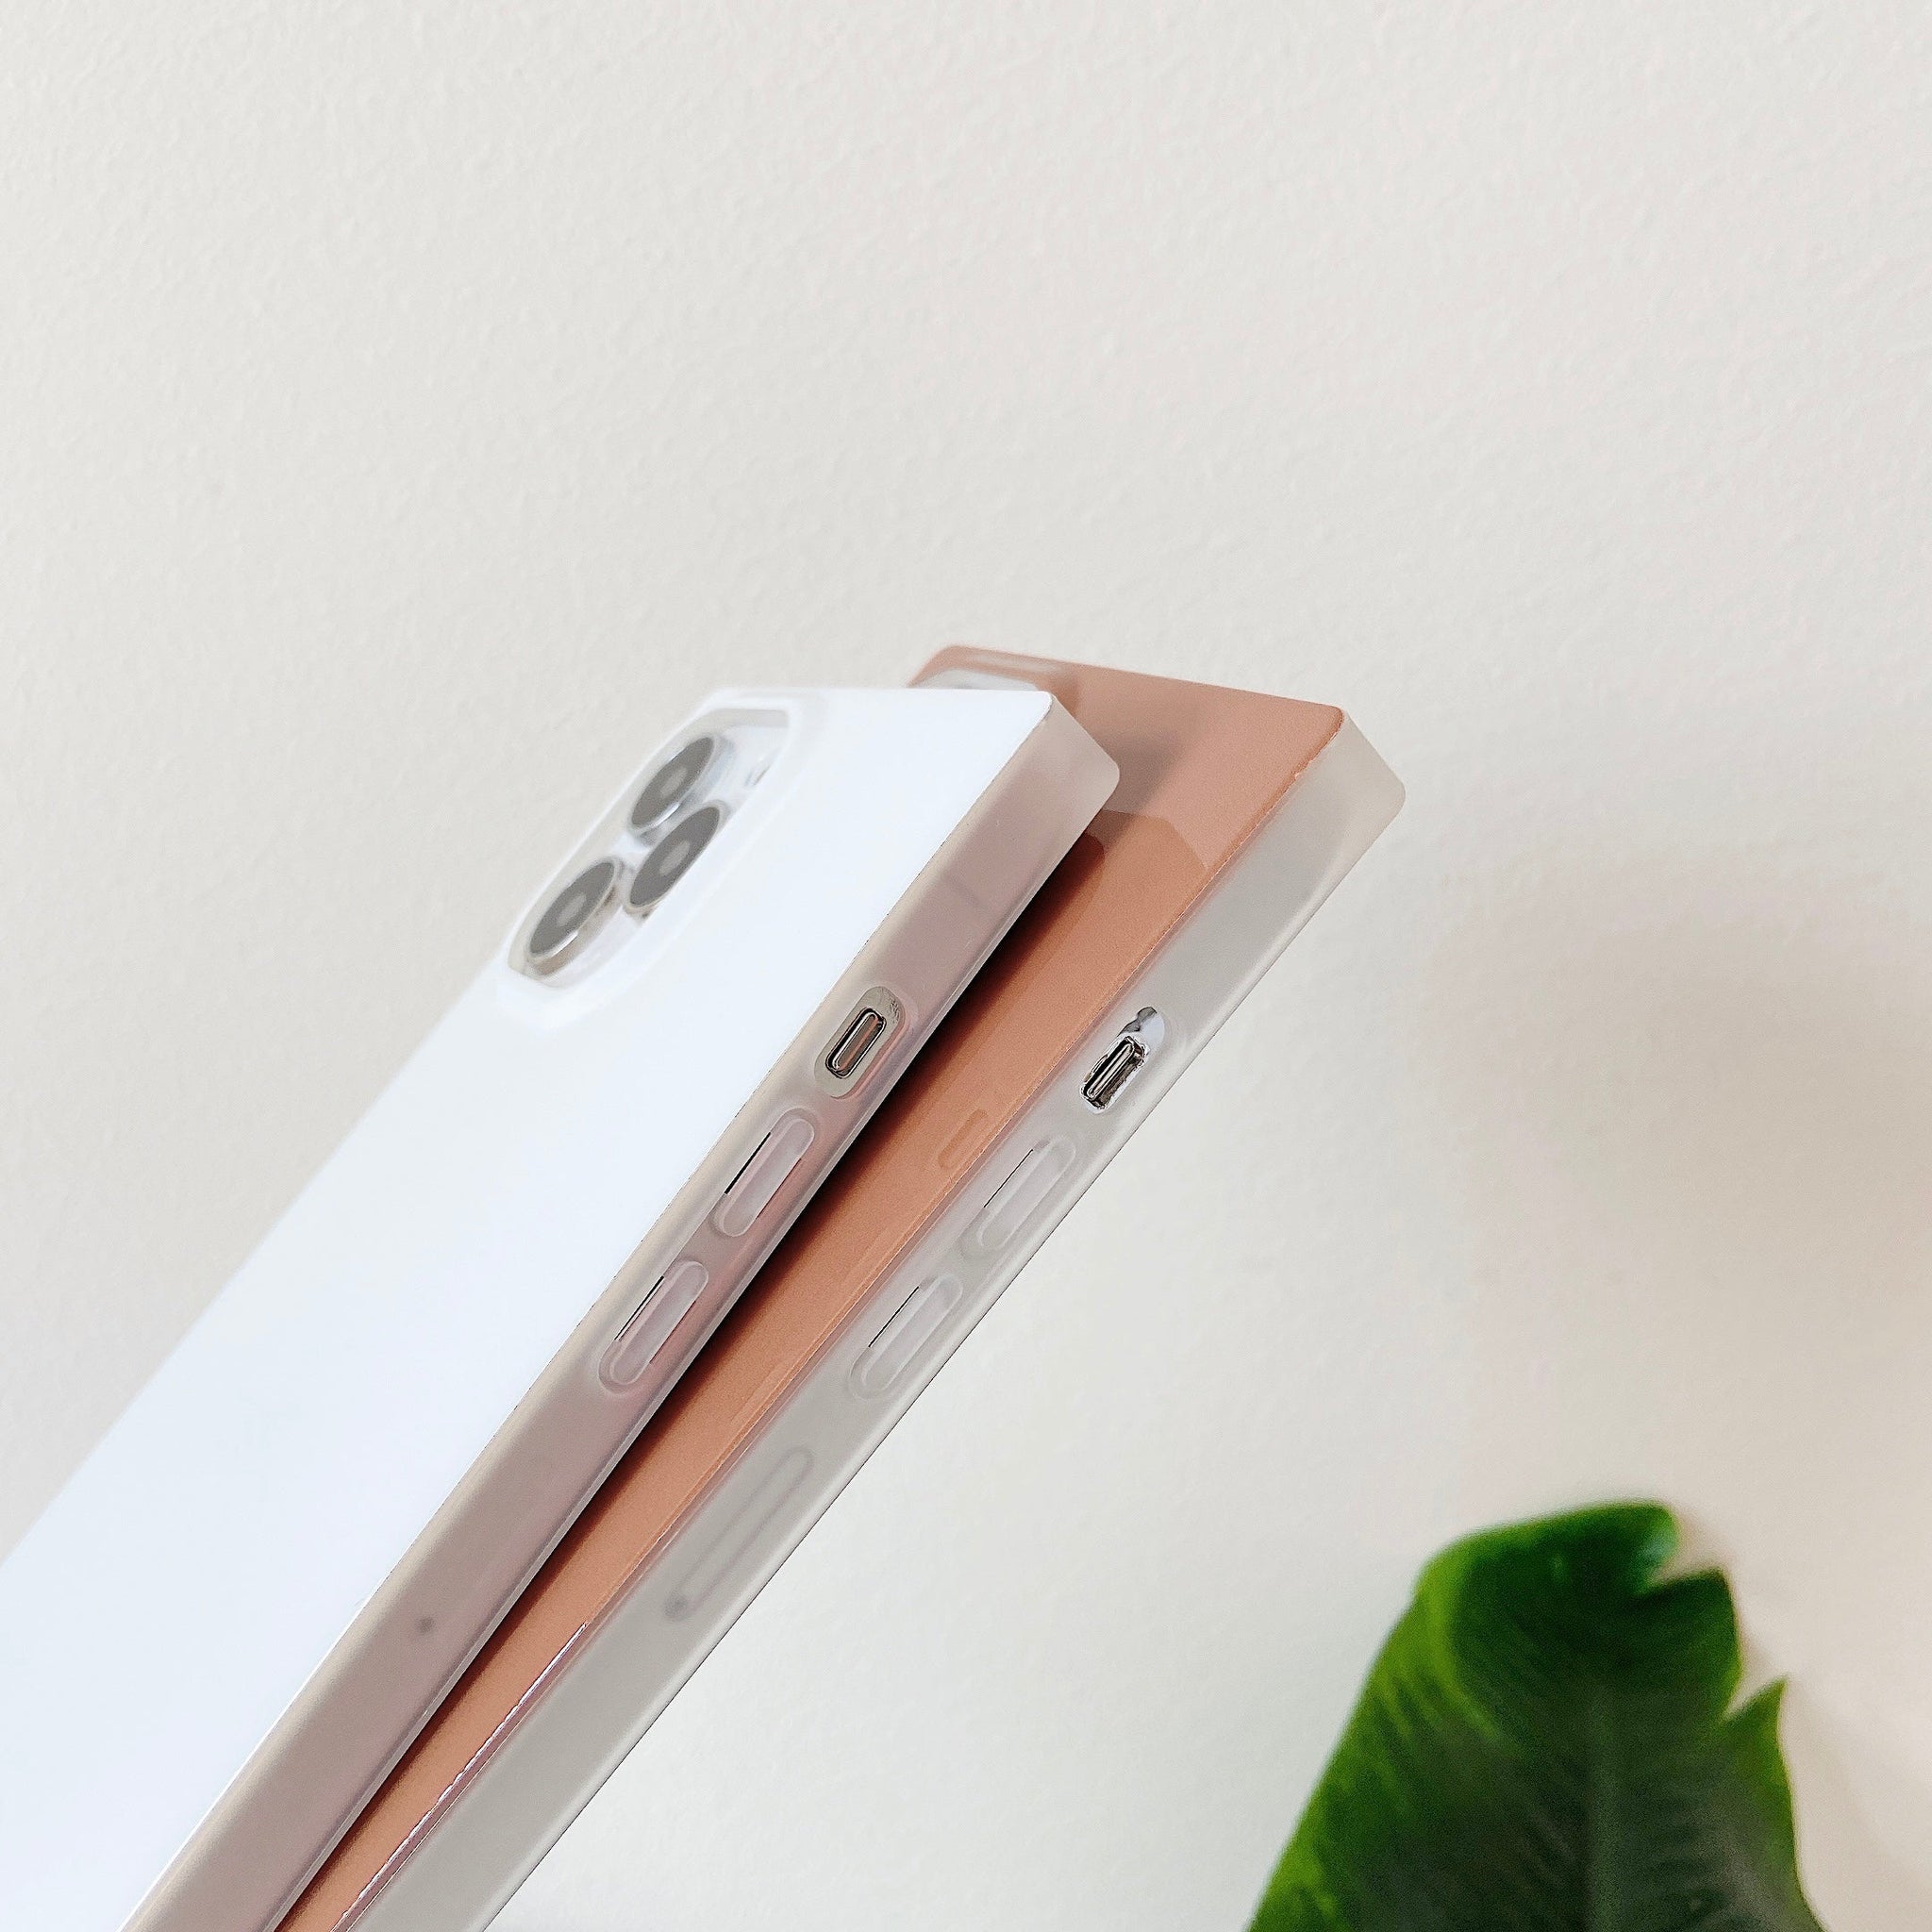 iPhone 13 Pro Max Case Square Neutral Plain Color (Nude)